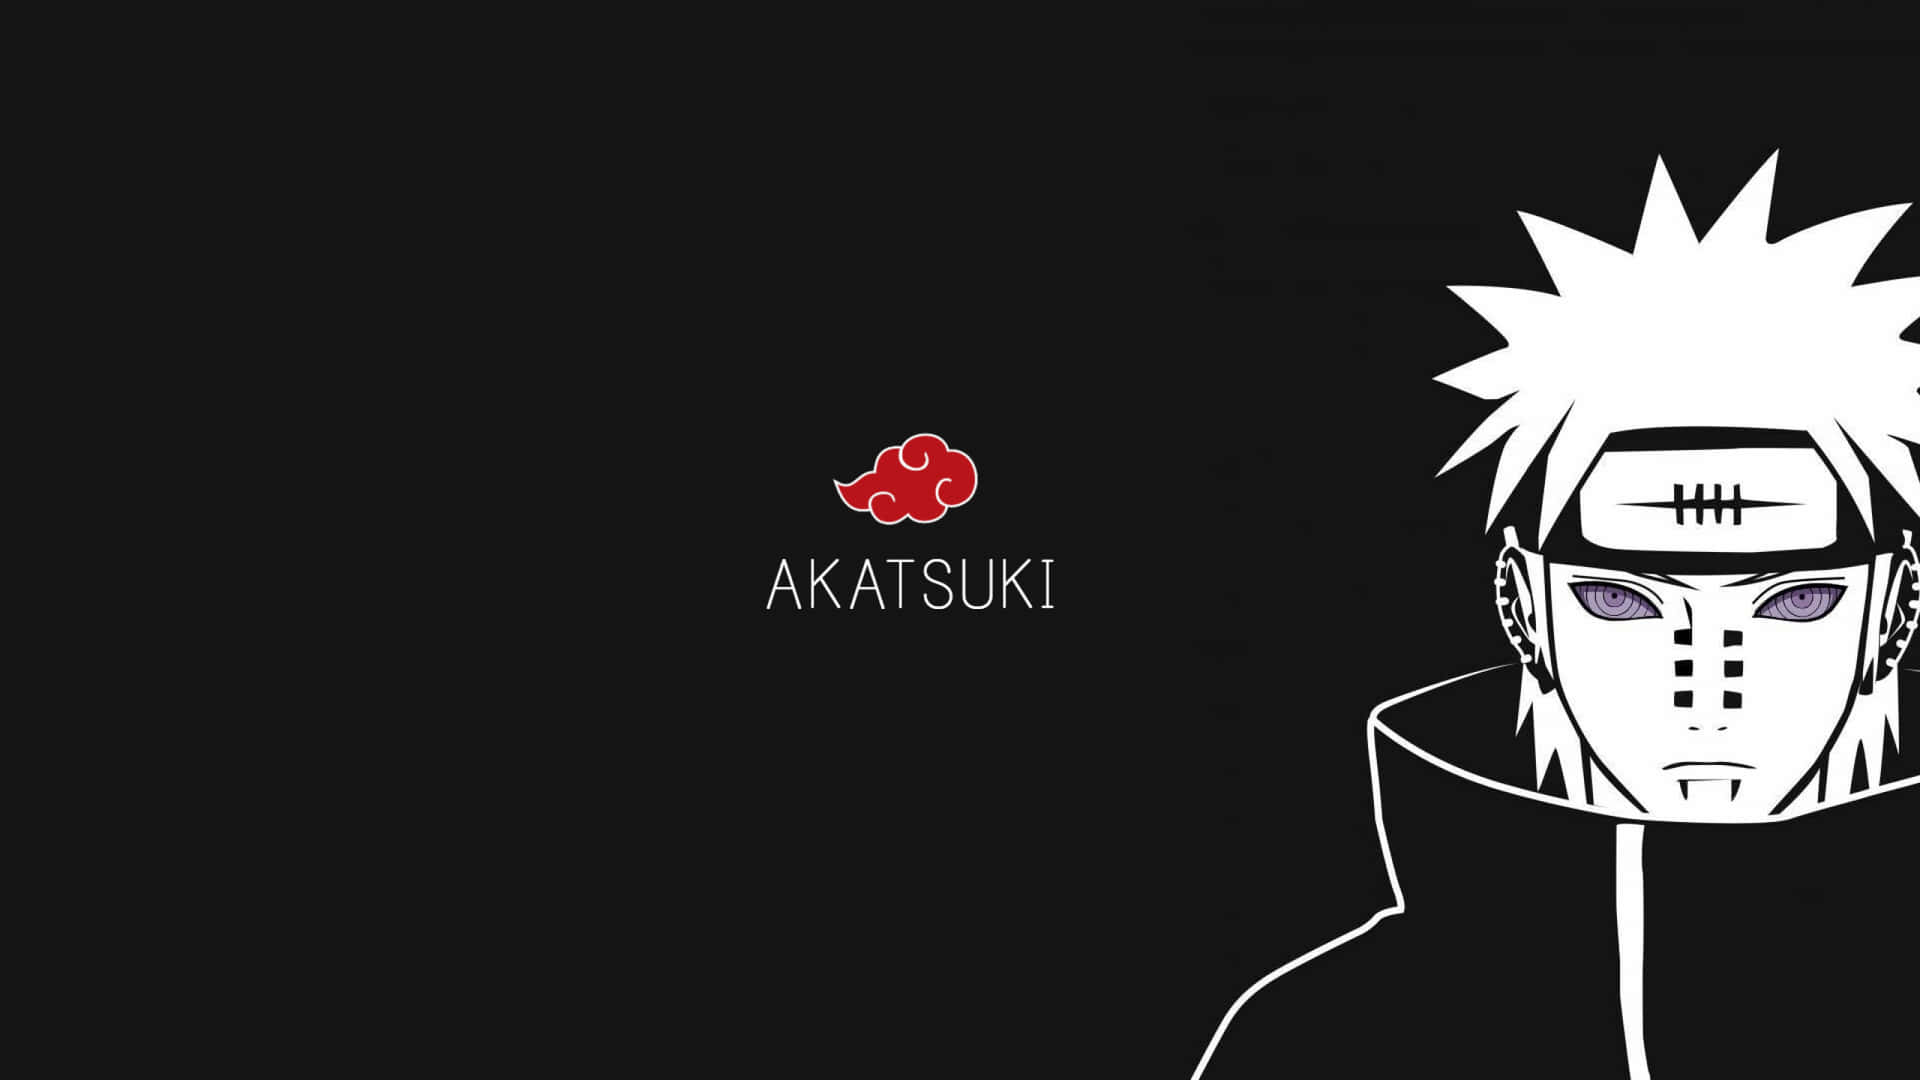 Akatsuki Pictures